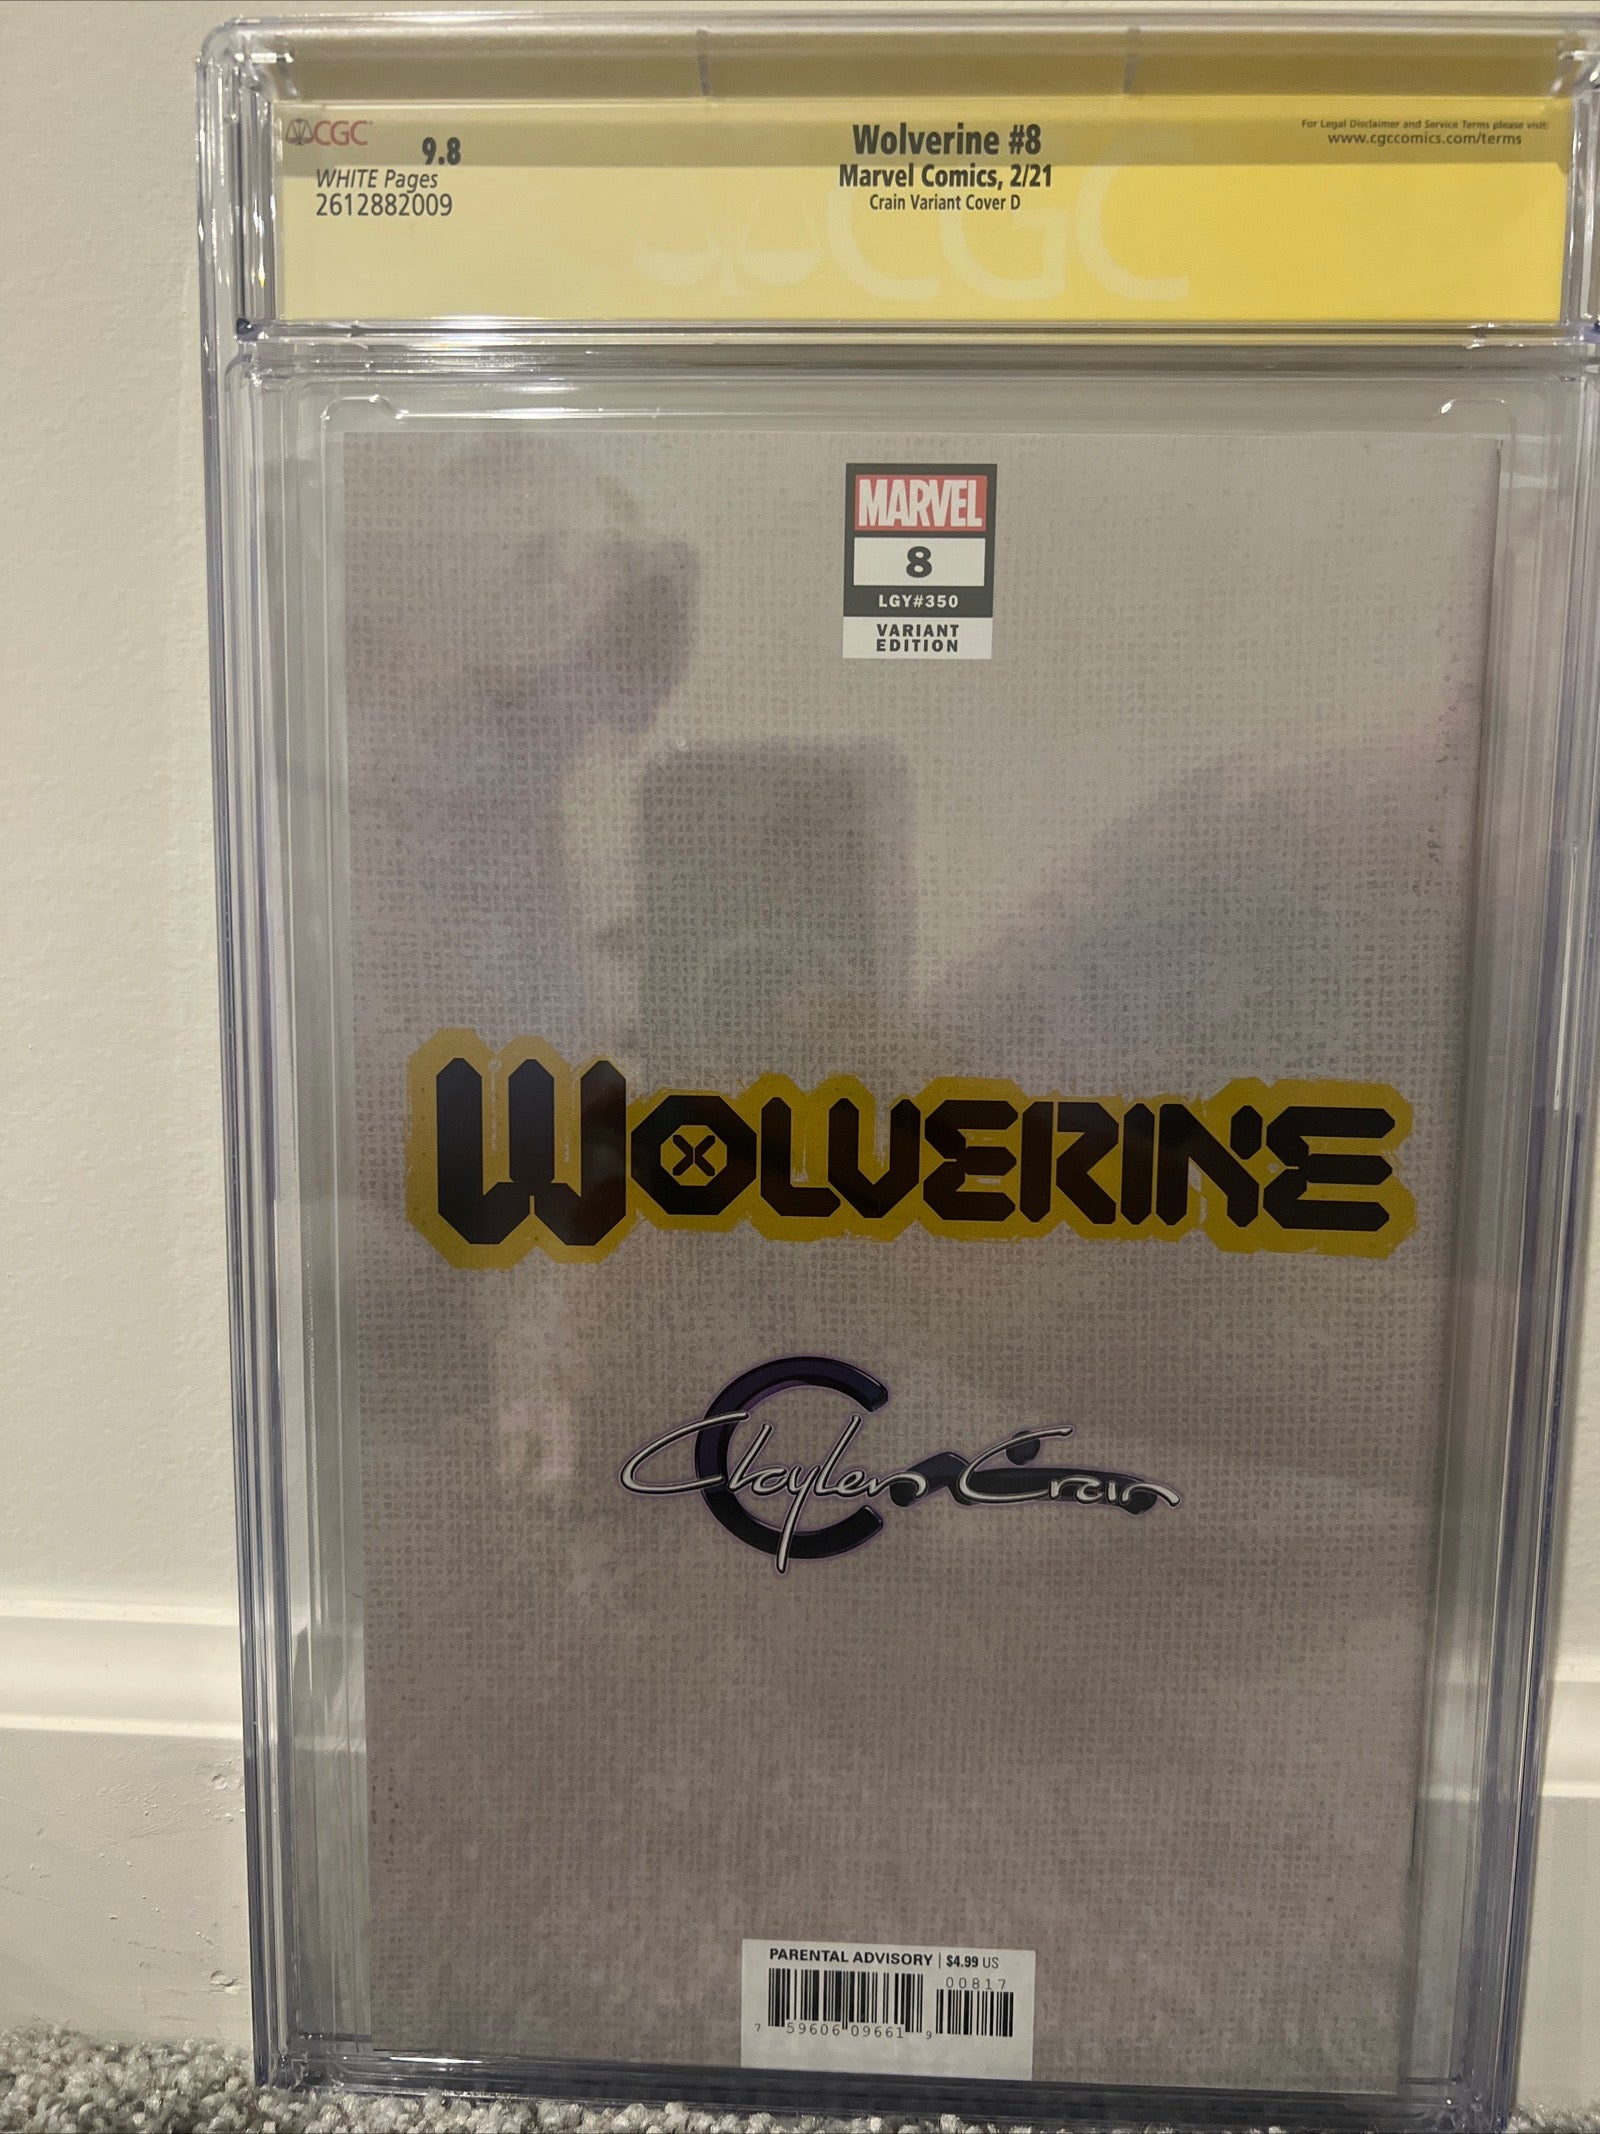 Wolverine #8 (6th Series) CGC SS 9.8 (Clayton Crain Virgin Cover D